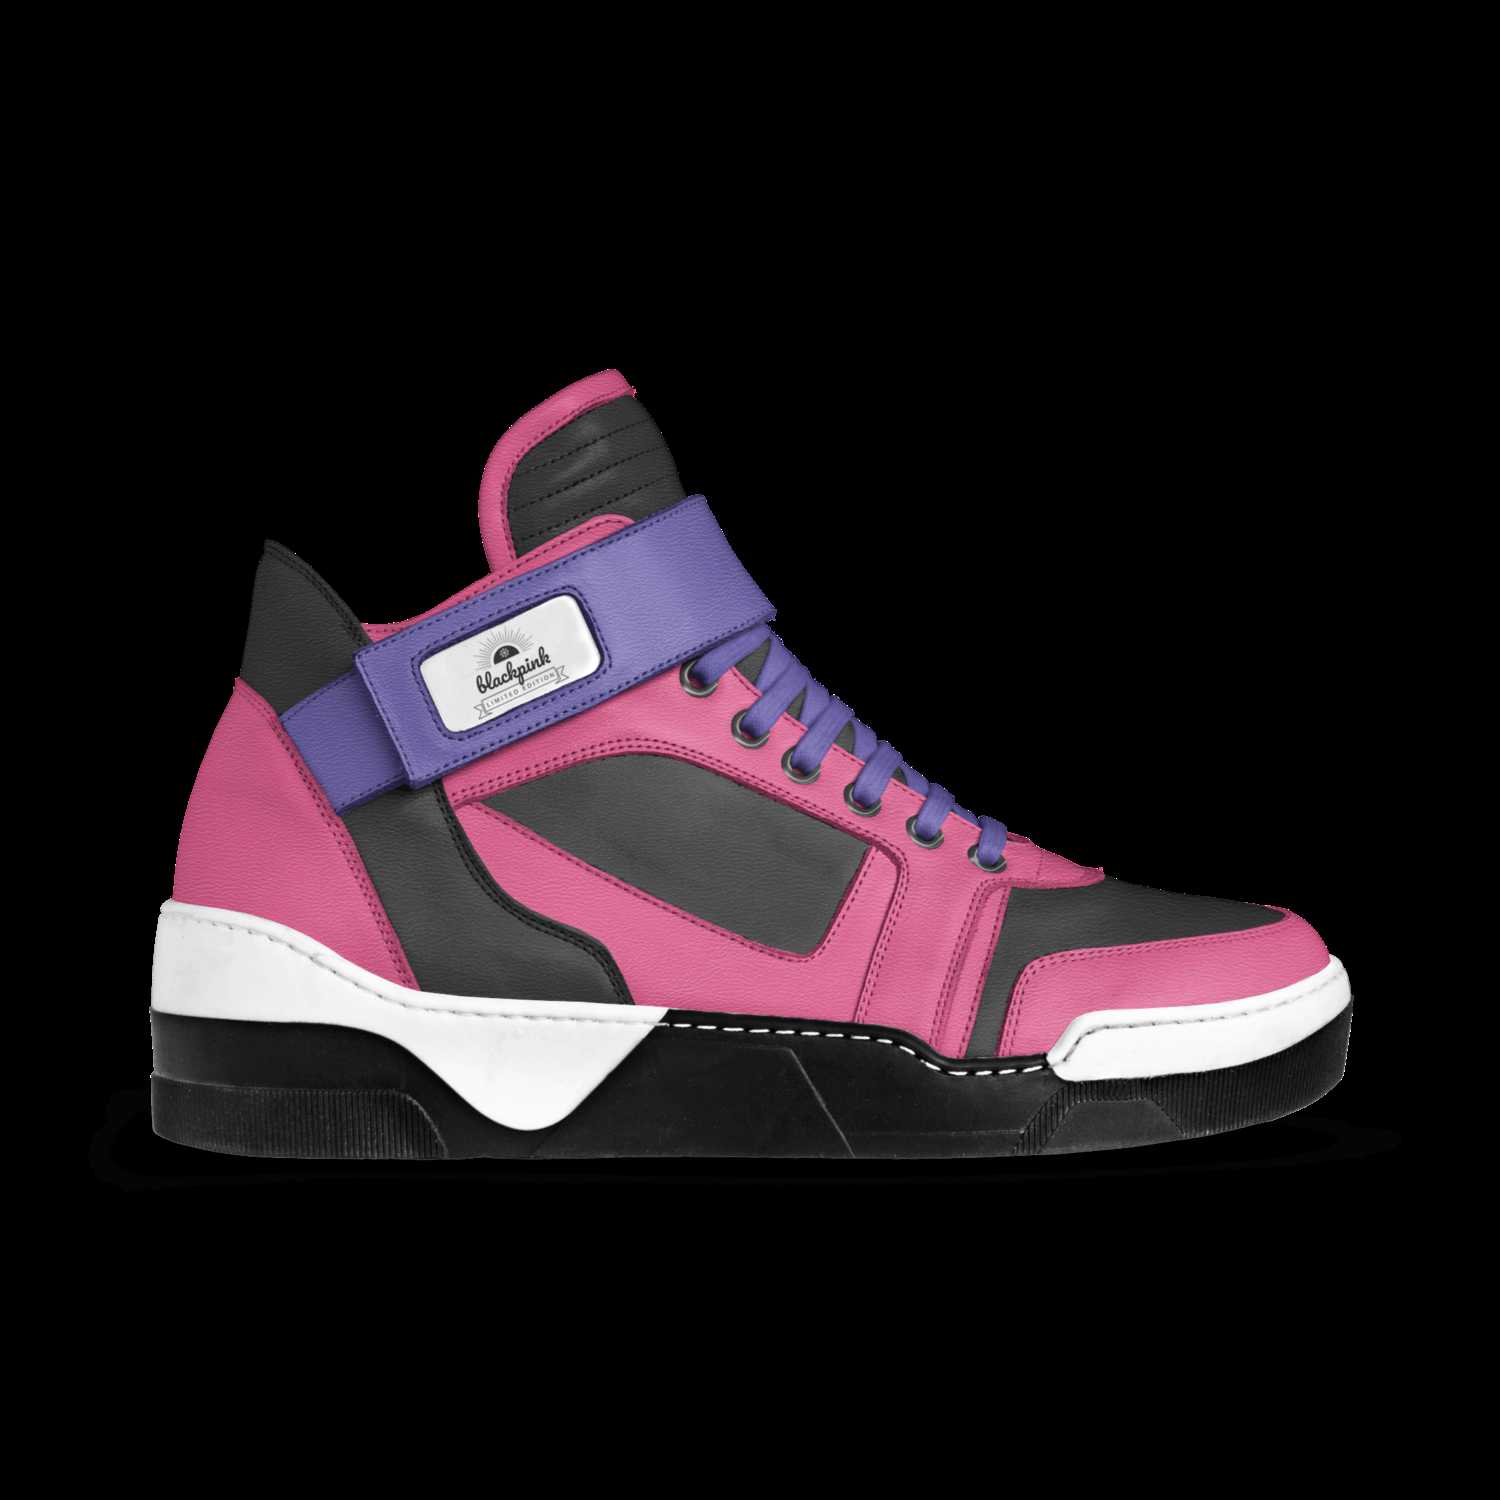 A Custom Shoe concept by Dinh Bao Tran